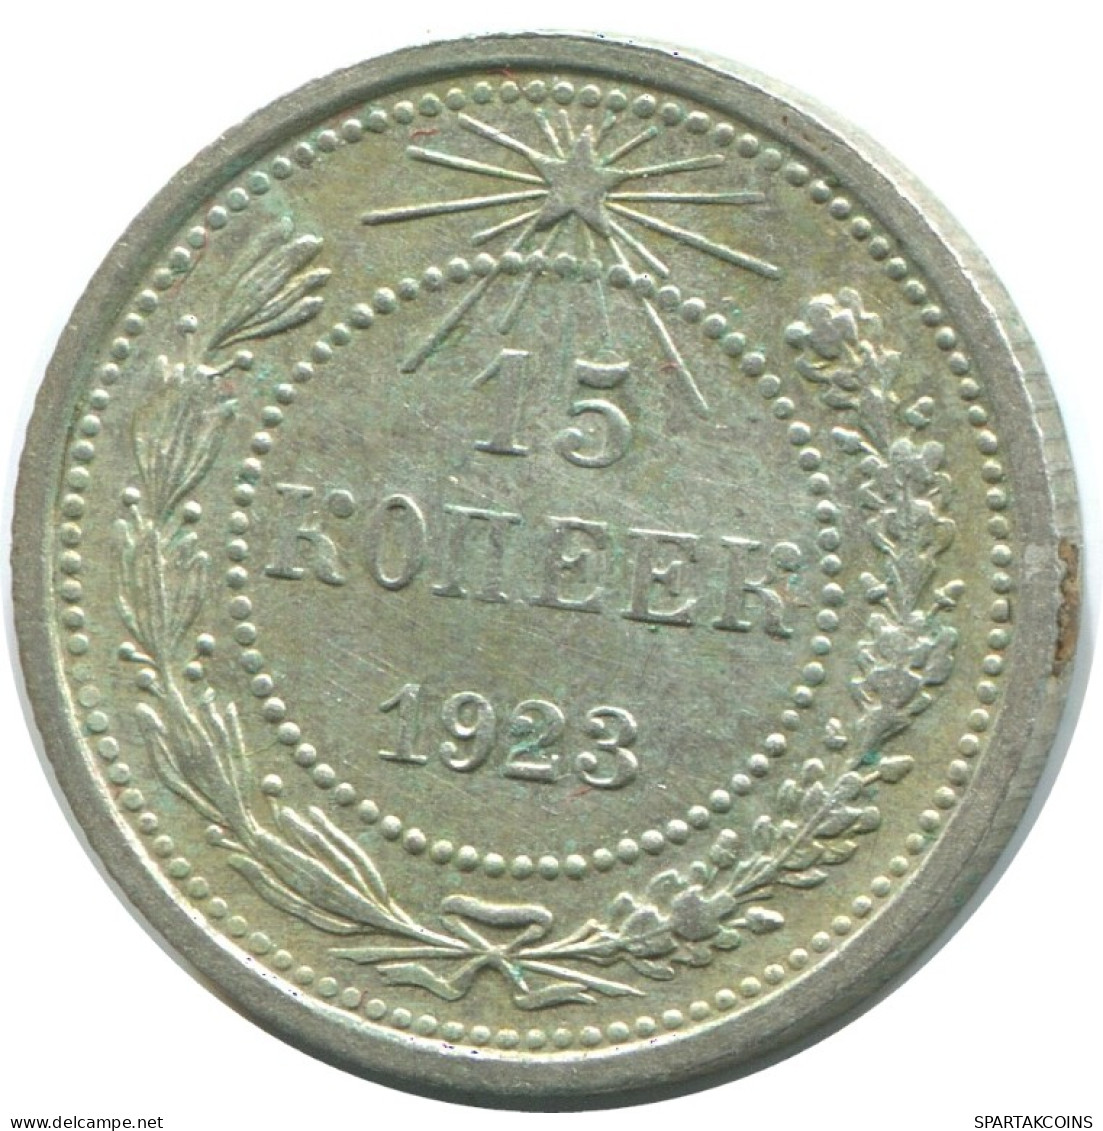 15 KOPEKS 1923 RUSSIA RSFSR SILVER Coin HIGH GRADE #AF021.4.U.A - Rusia